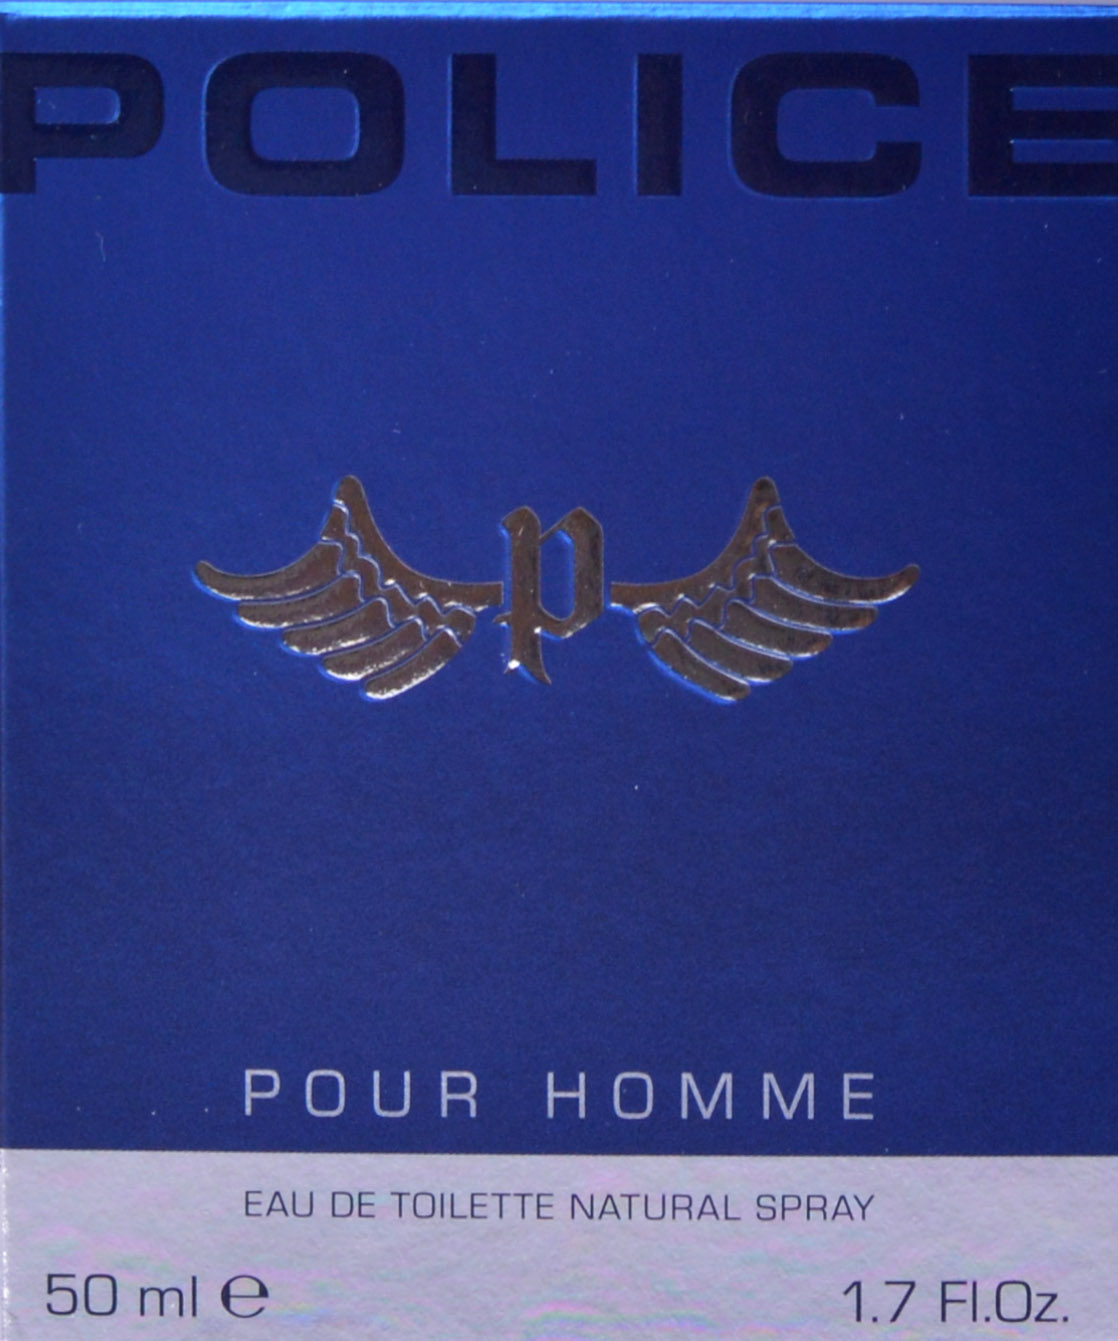 http://www.police.ne.jp/images/police_perfume_to_be_hom_03.jpg